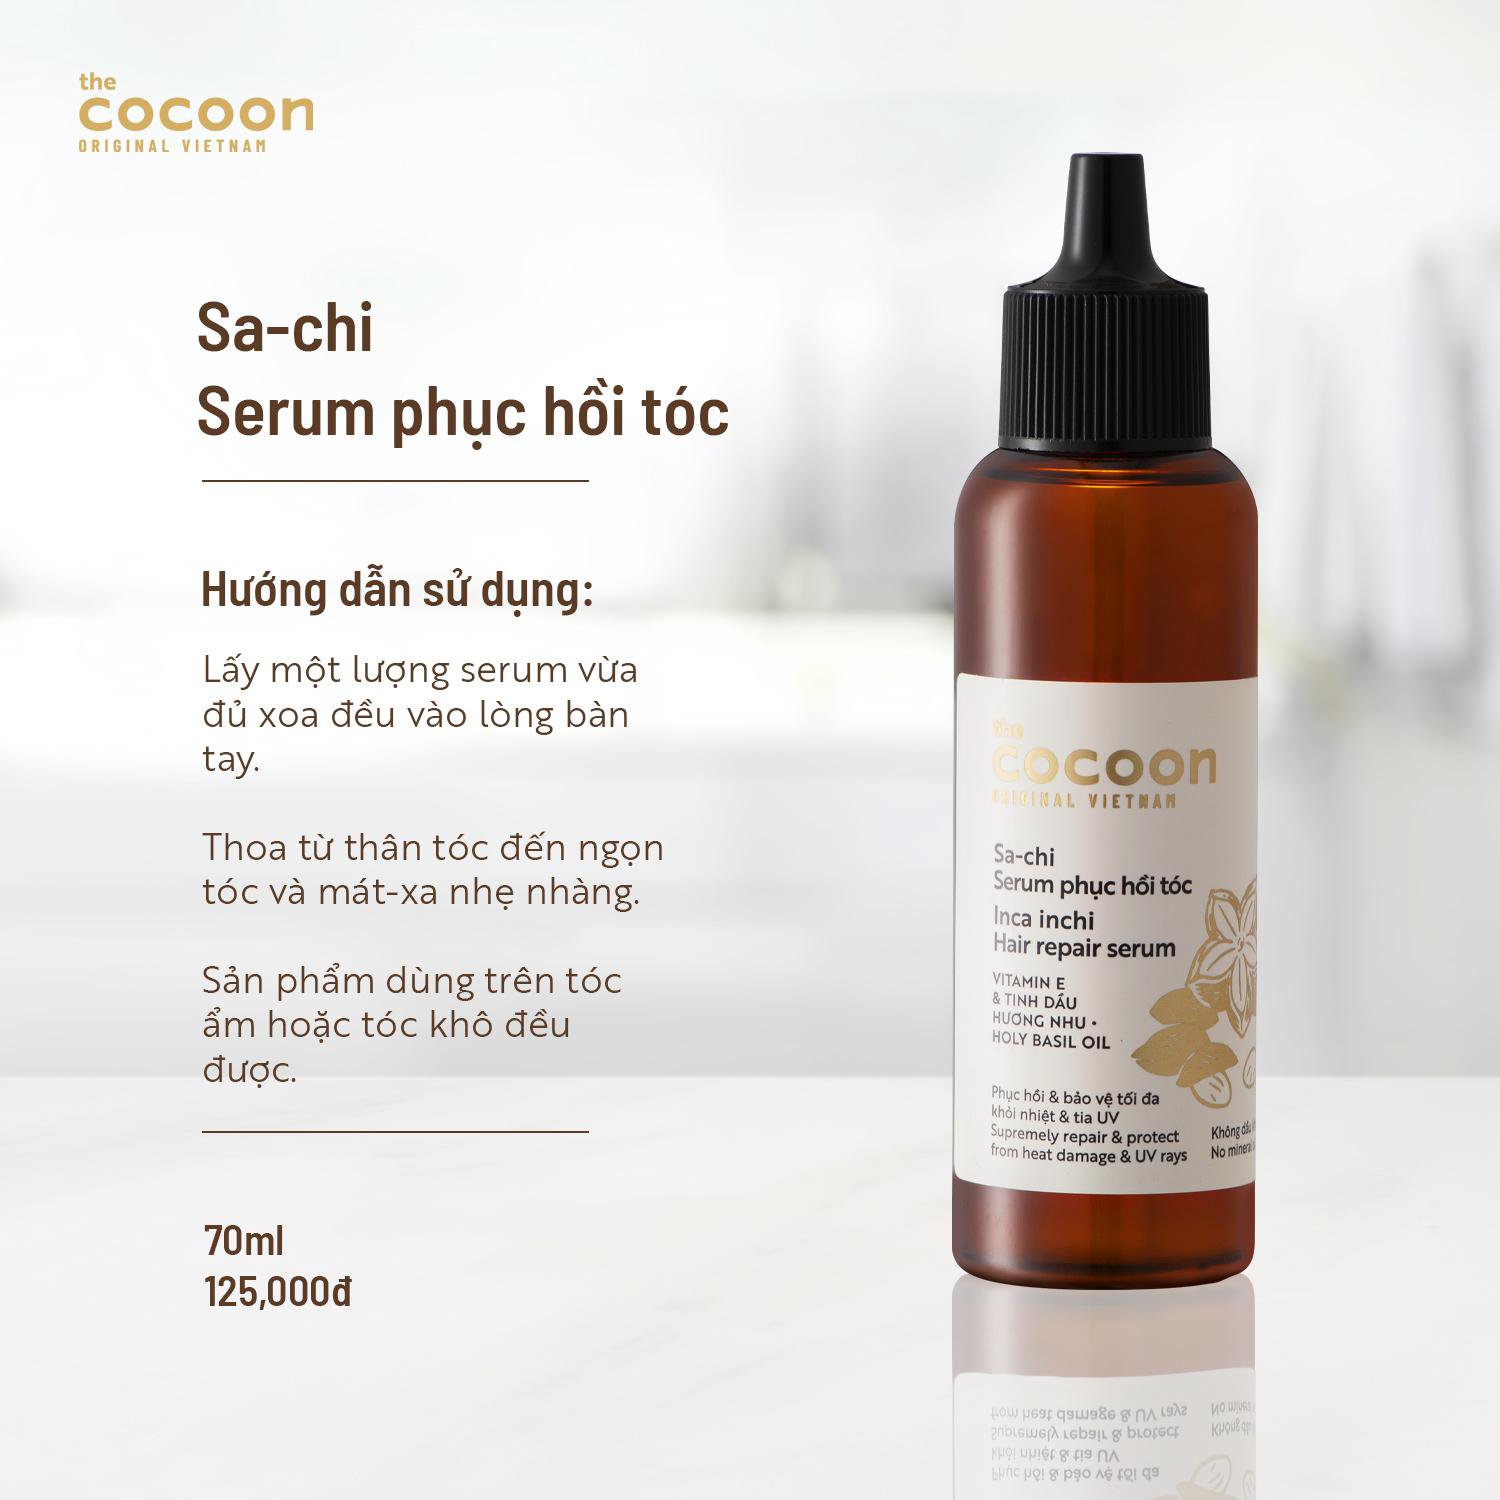 Sa-chi Serum phục hồi tóc Inca Inchi Hair Repair Serum 70ml của The Cocoon Vietnam